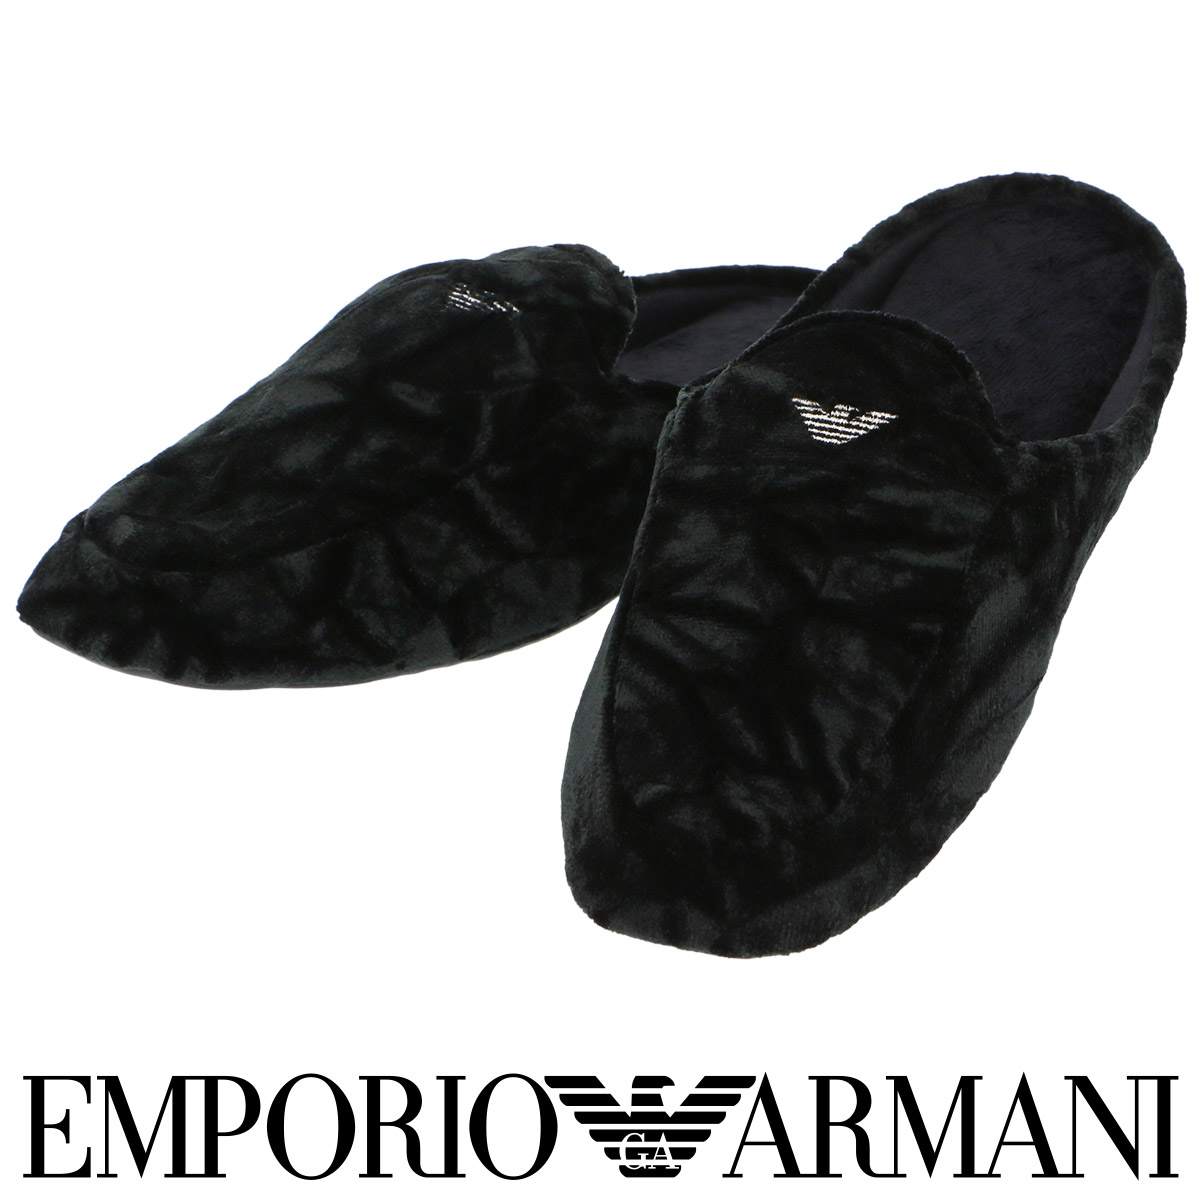 emporio armani shoes sale